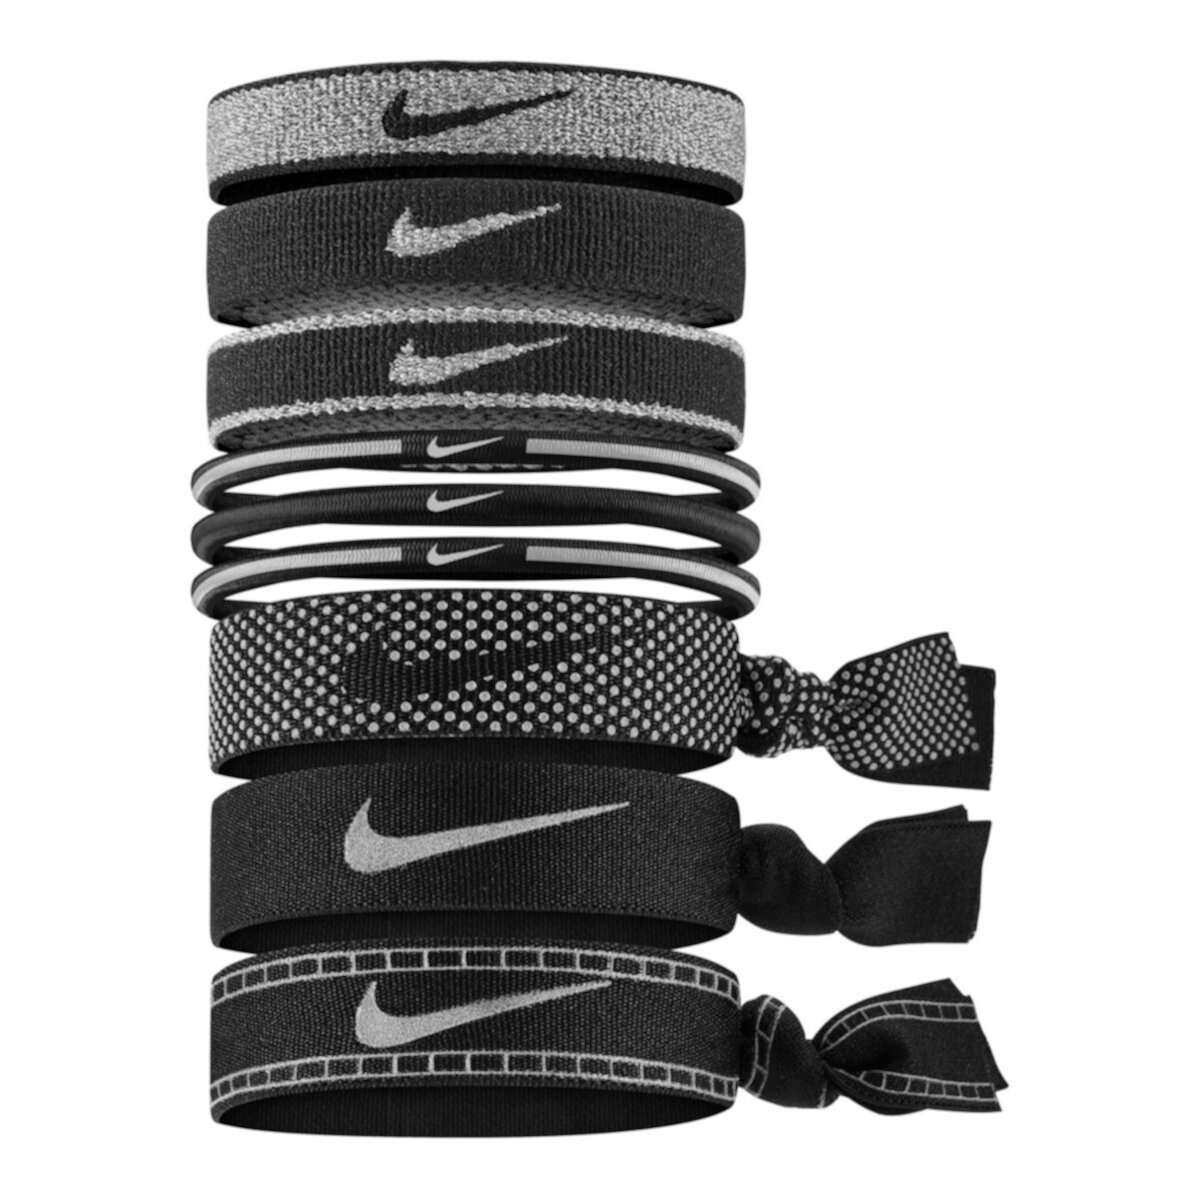 Резинка найк. Nike Hairbands. Nike skinny Hairbands (8 Pack). Резинка Nike. Резинка для волос найк.